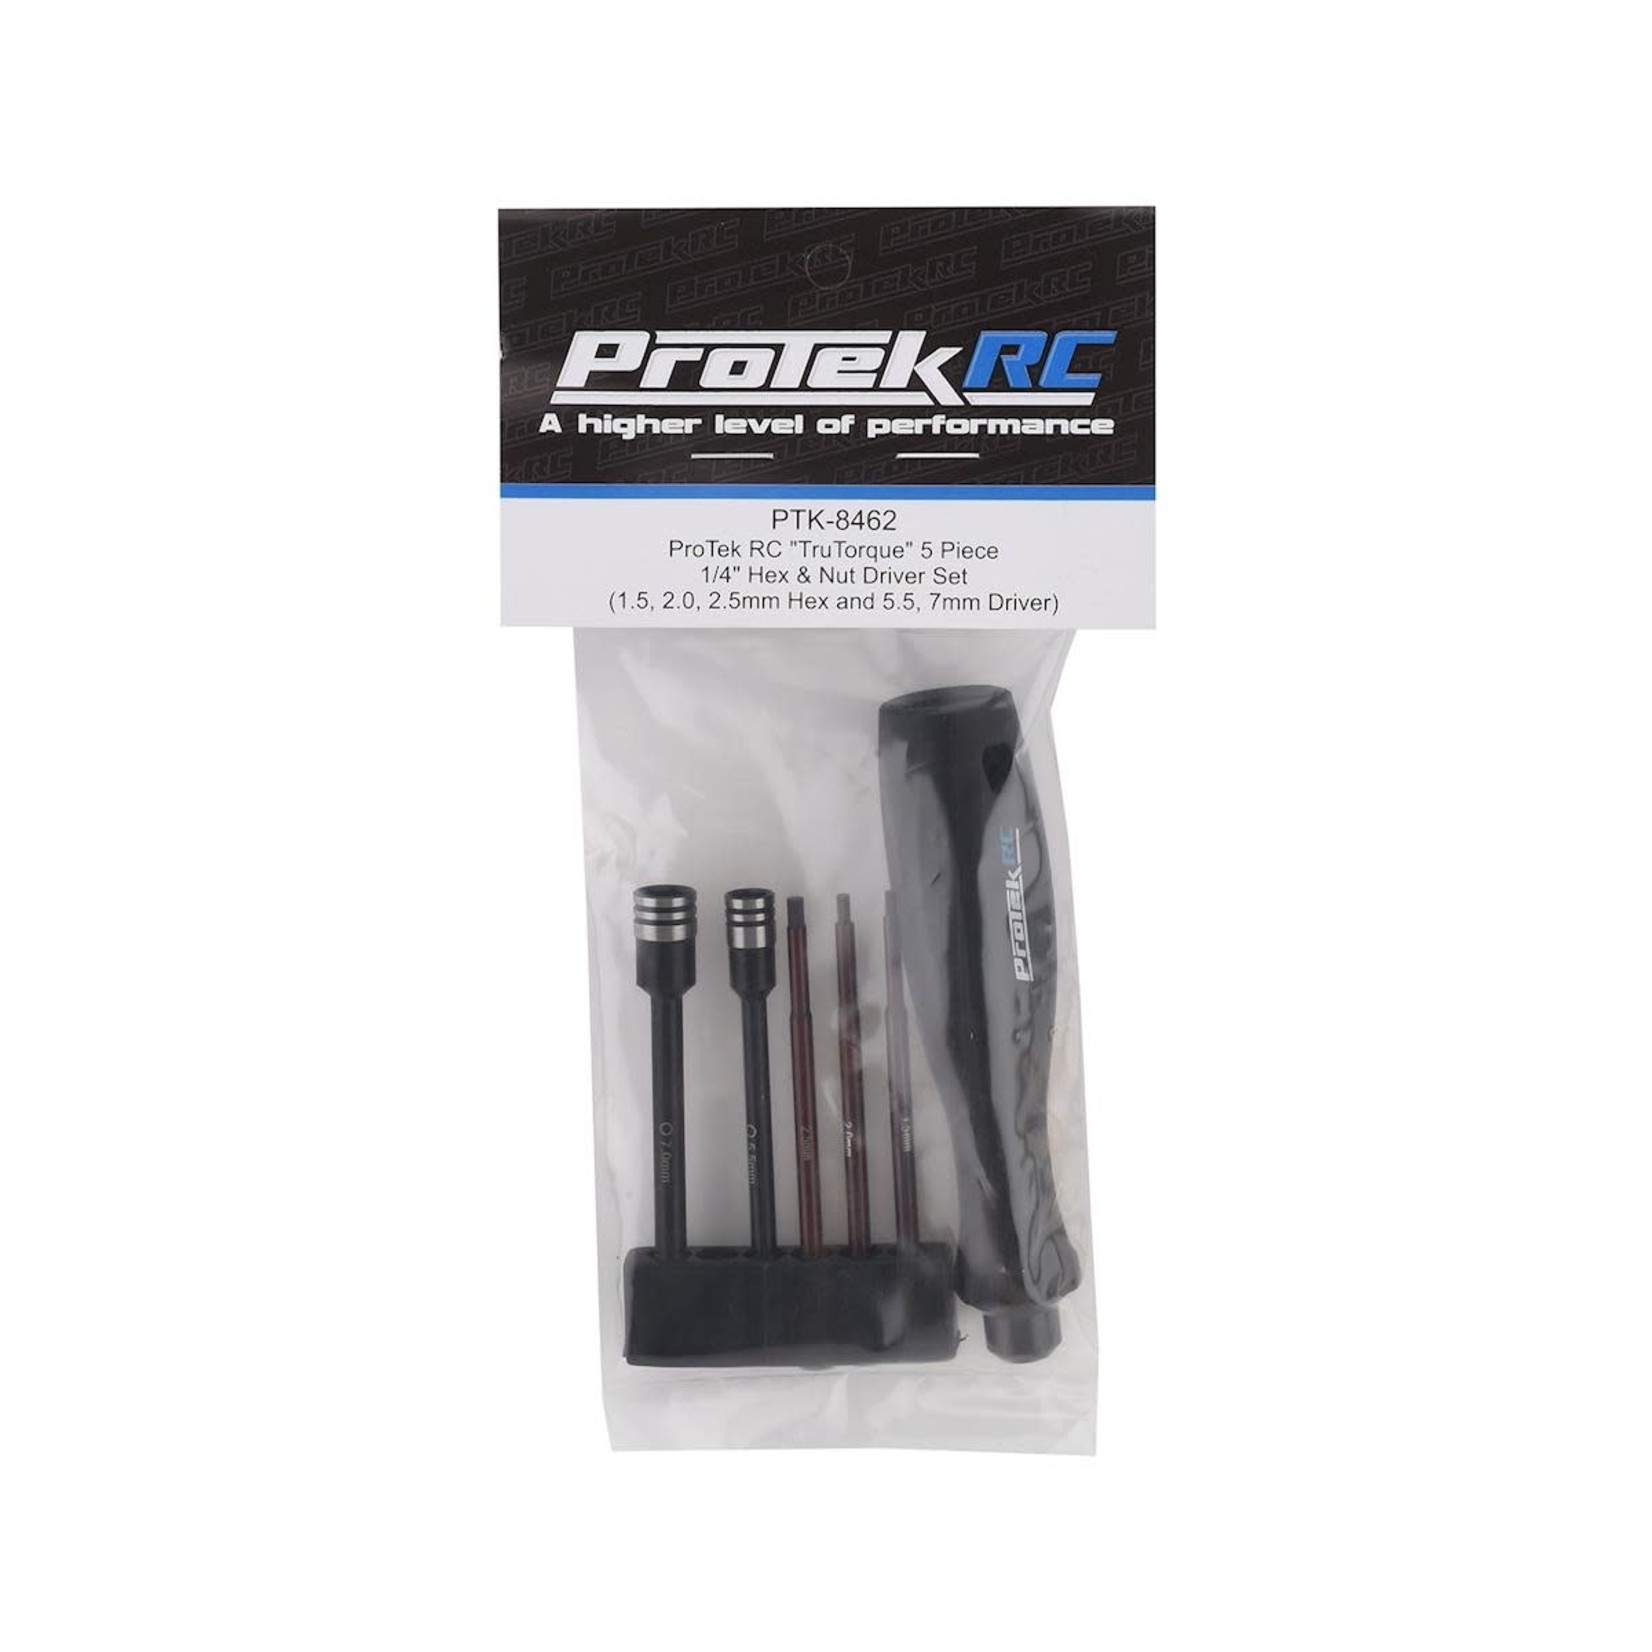 ProTek RC ProTek RC Tool "TruTorque" 5-Piece 1/4" Drive Hex & Nut Driver Set